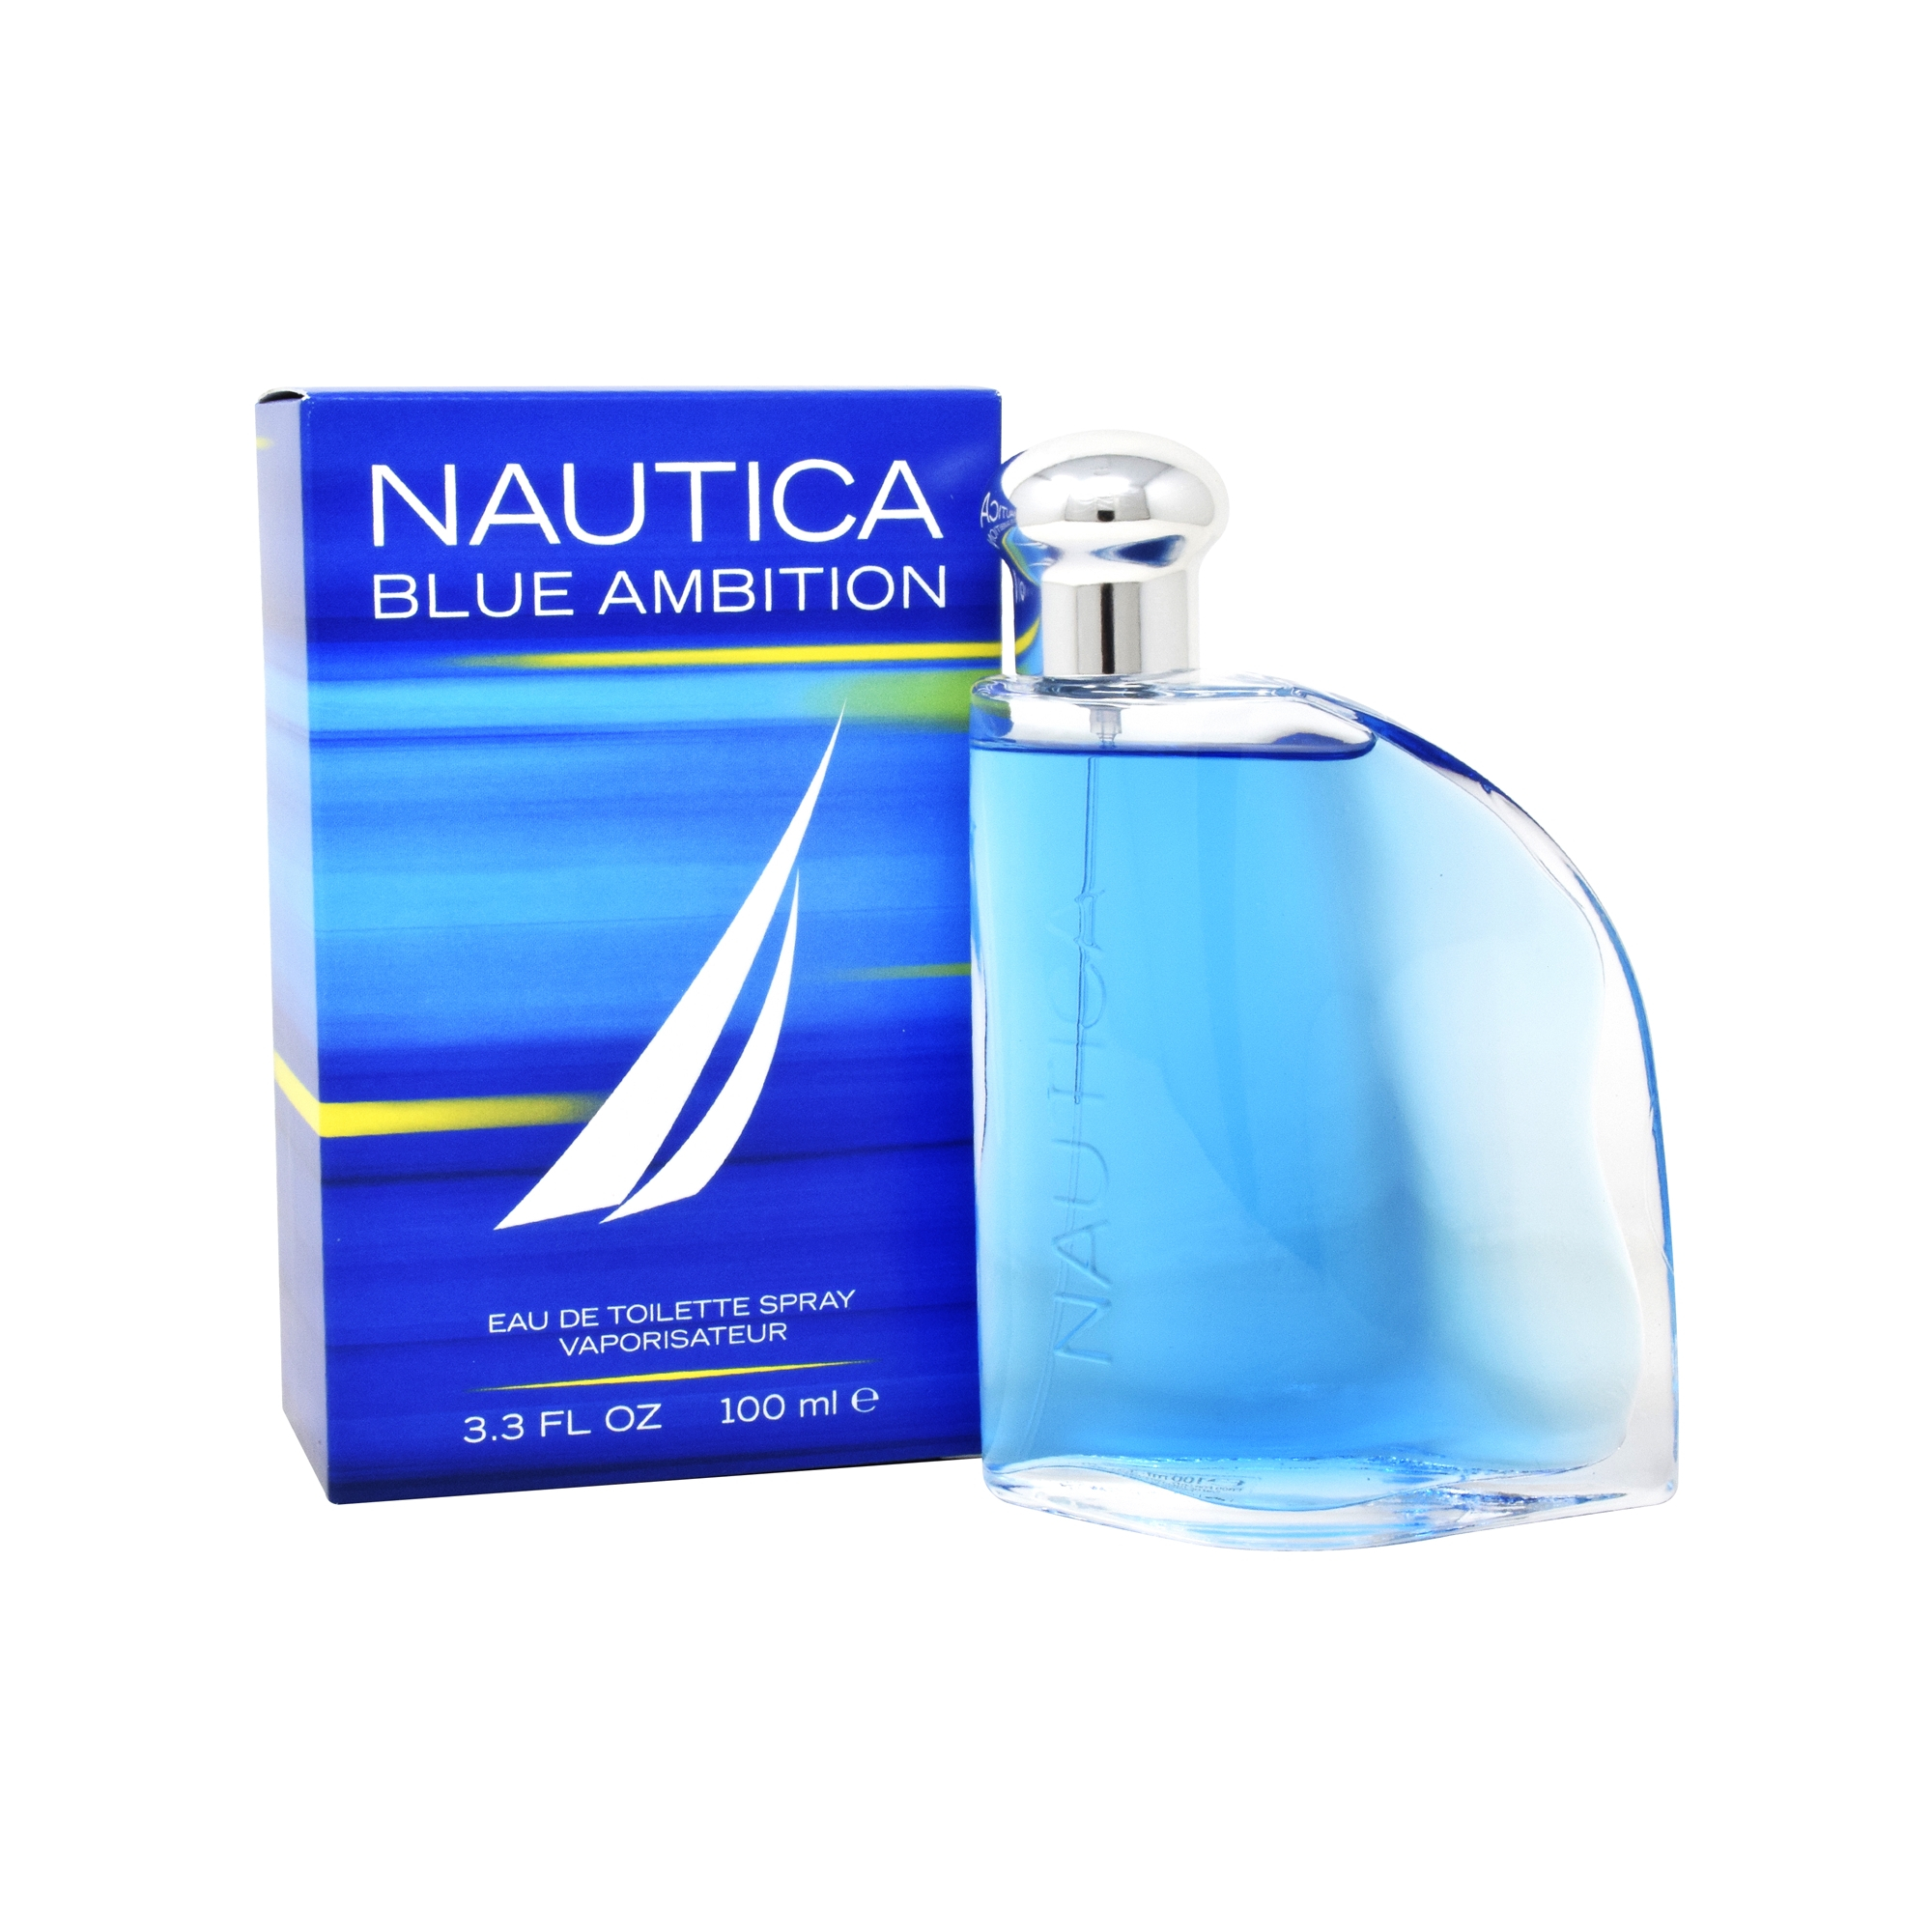 Nautica Blue Ambition 100 ml Edt Spray de Nautica.